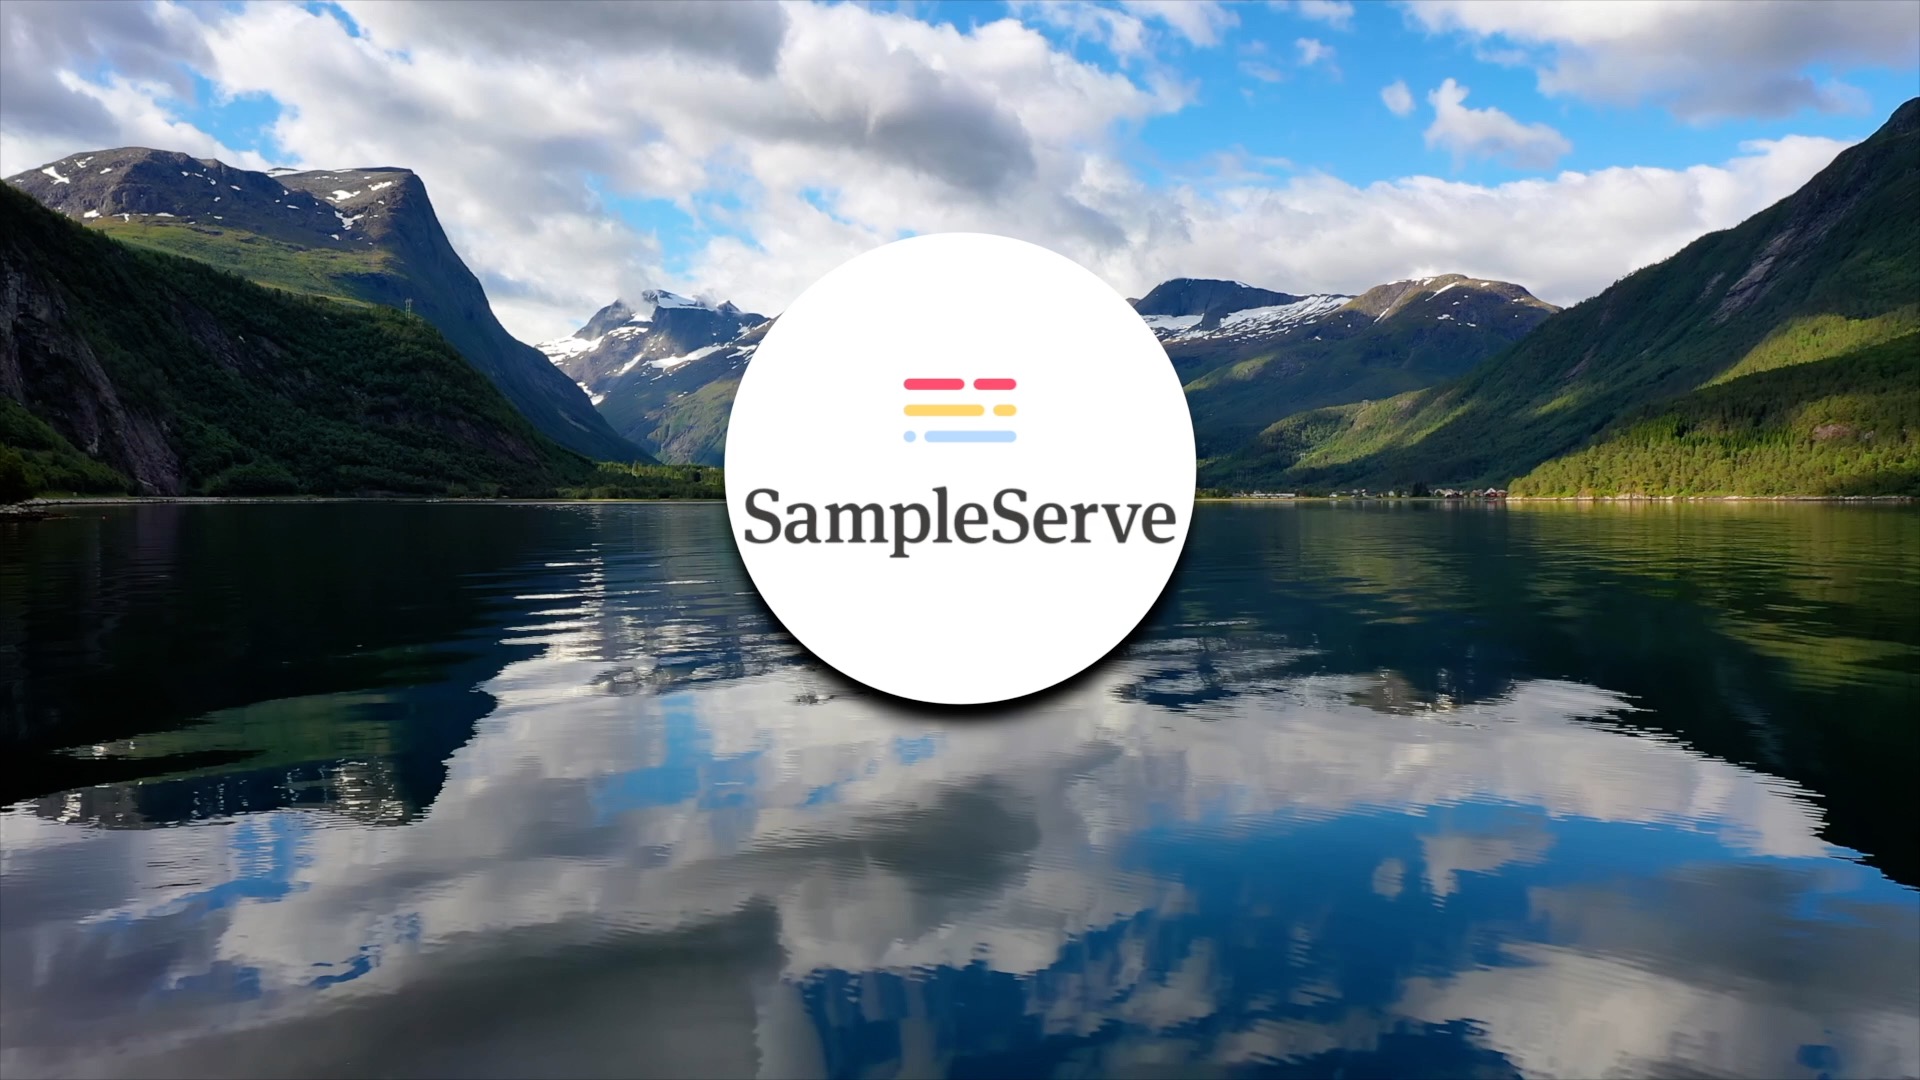 SampleServe - Digital Solutions for Sampling and Reporting